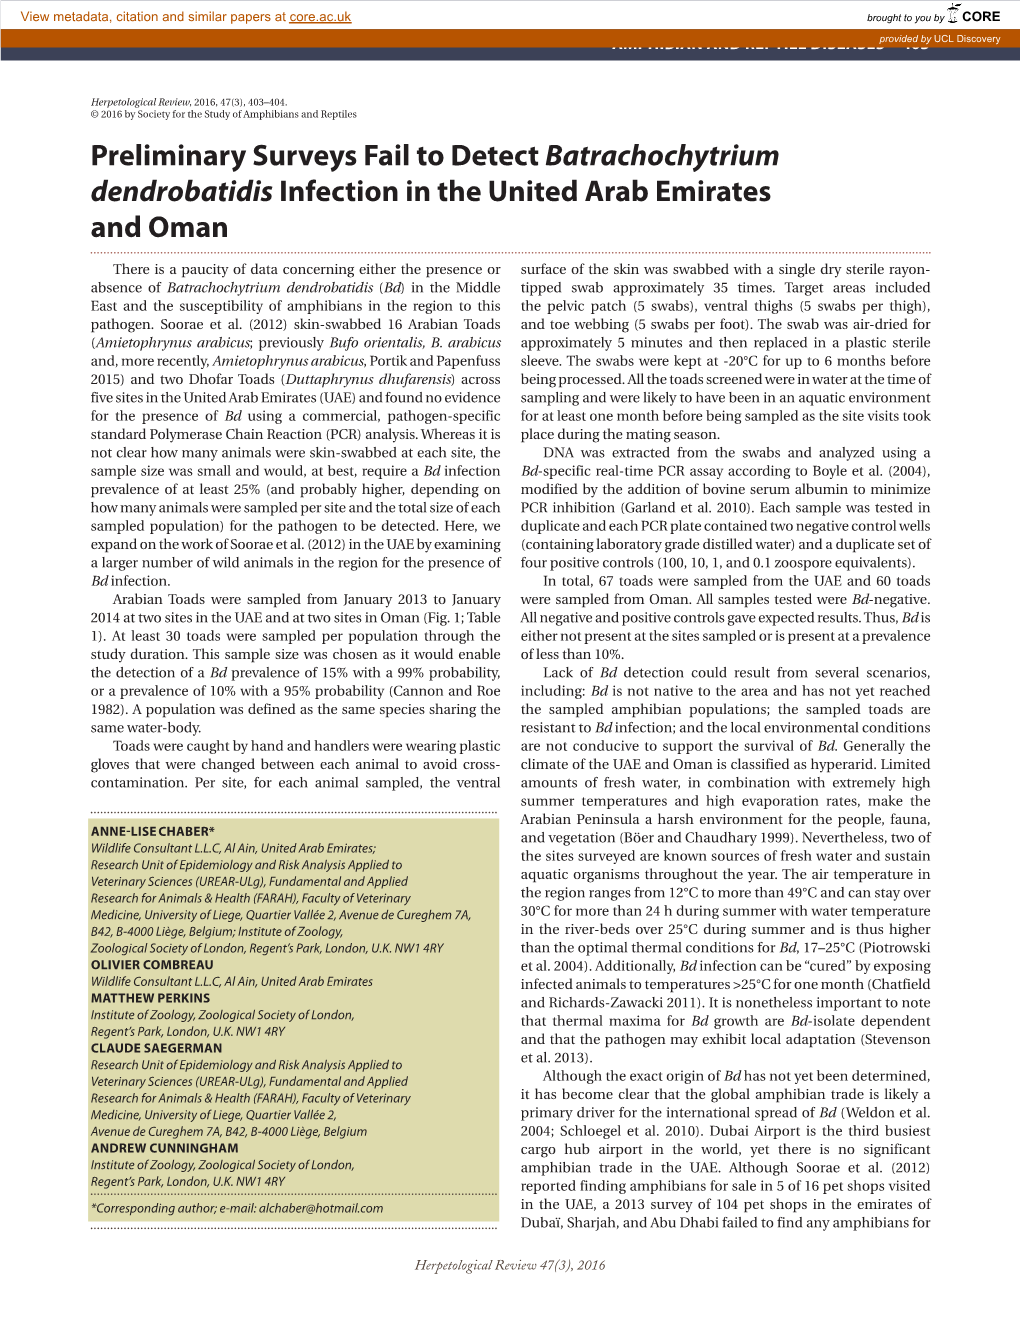 Preliminary Surveys Fail to Detect Batrachochytrium Dendrobatidis Infection in the United Arab Emirates and Oman